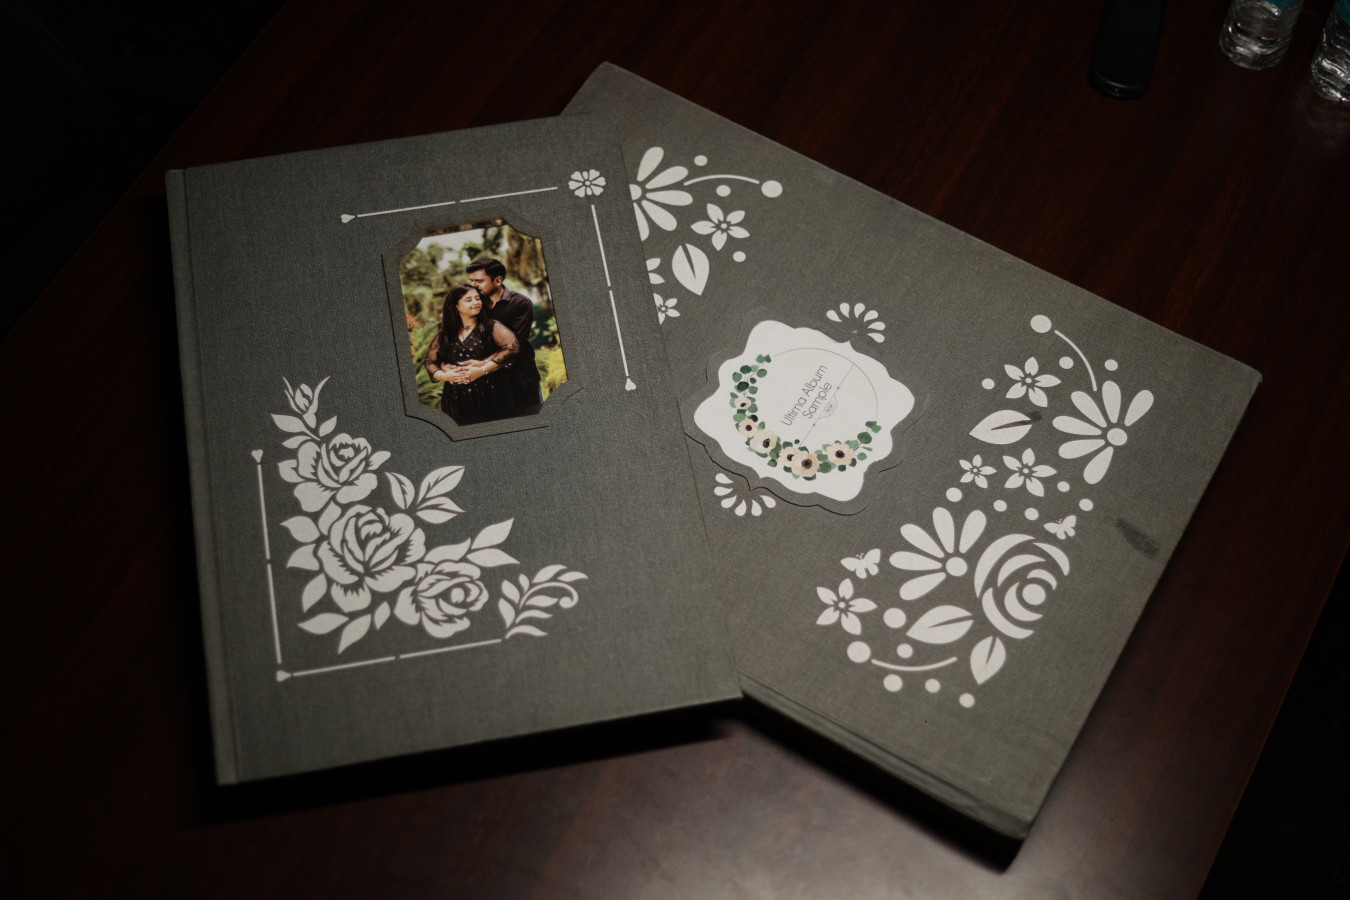 camouflageclicks-wedding-album-collections-|-wedding-photo-book